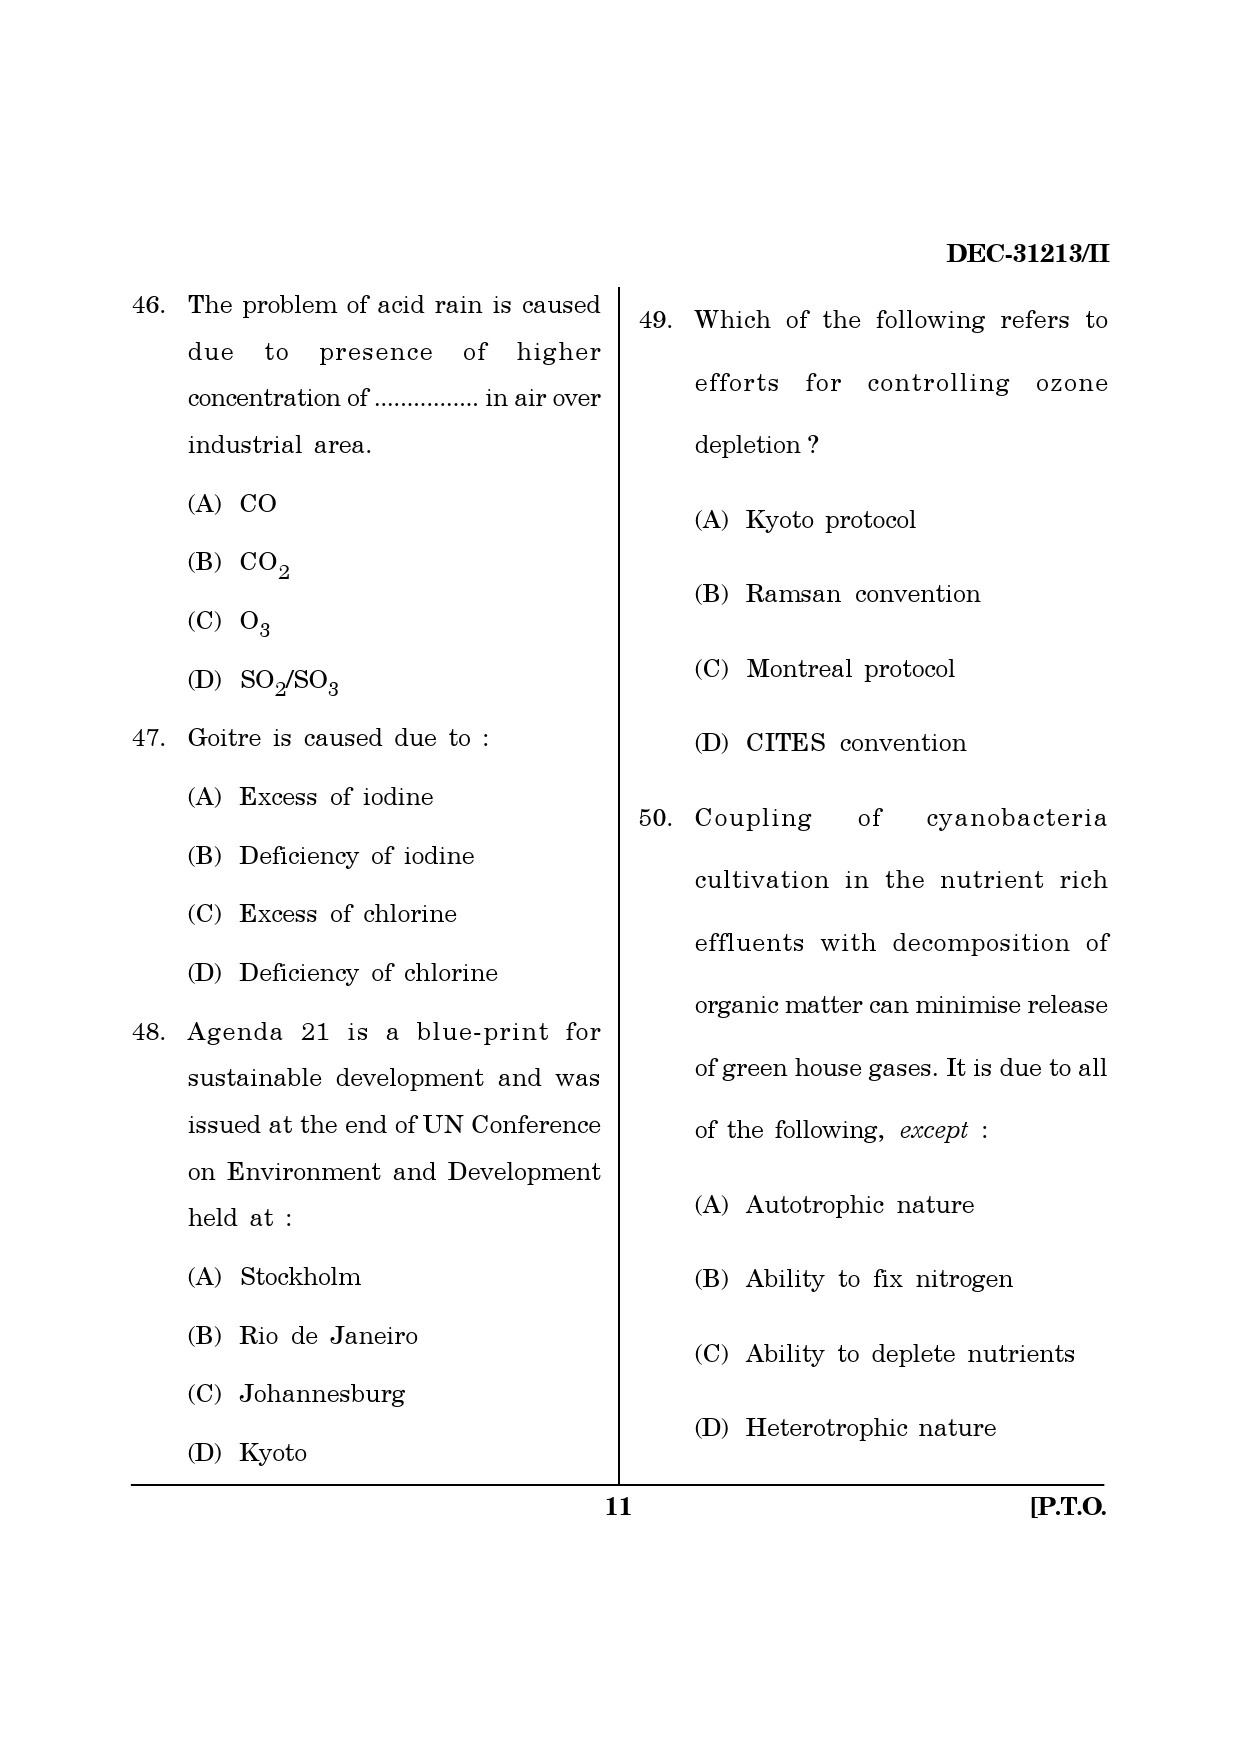 Maharashtra SET Environmental Sciences Question Paper II December 2013 10